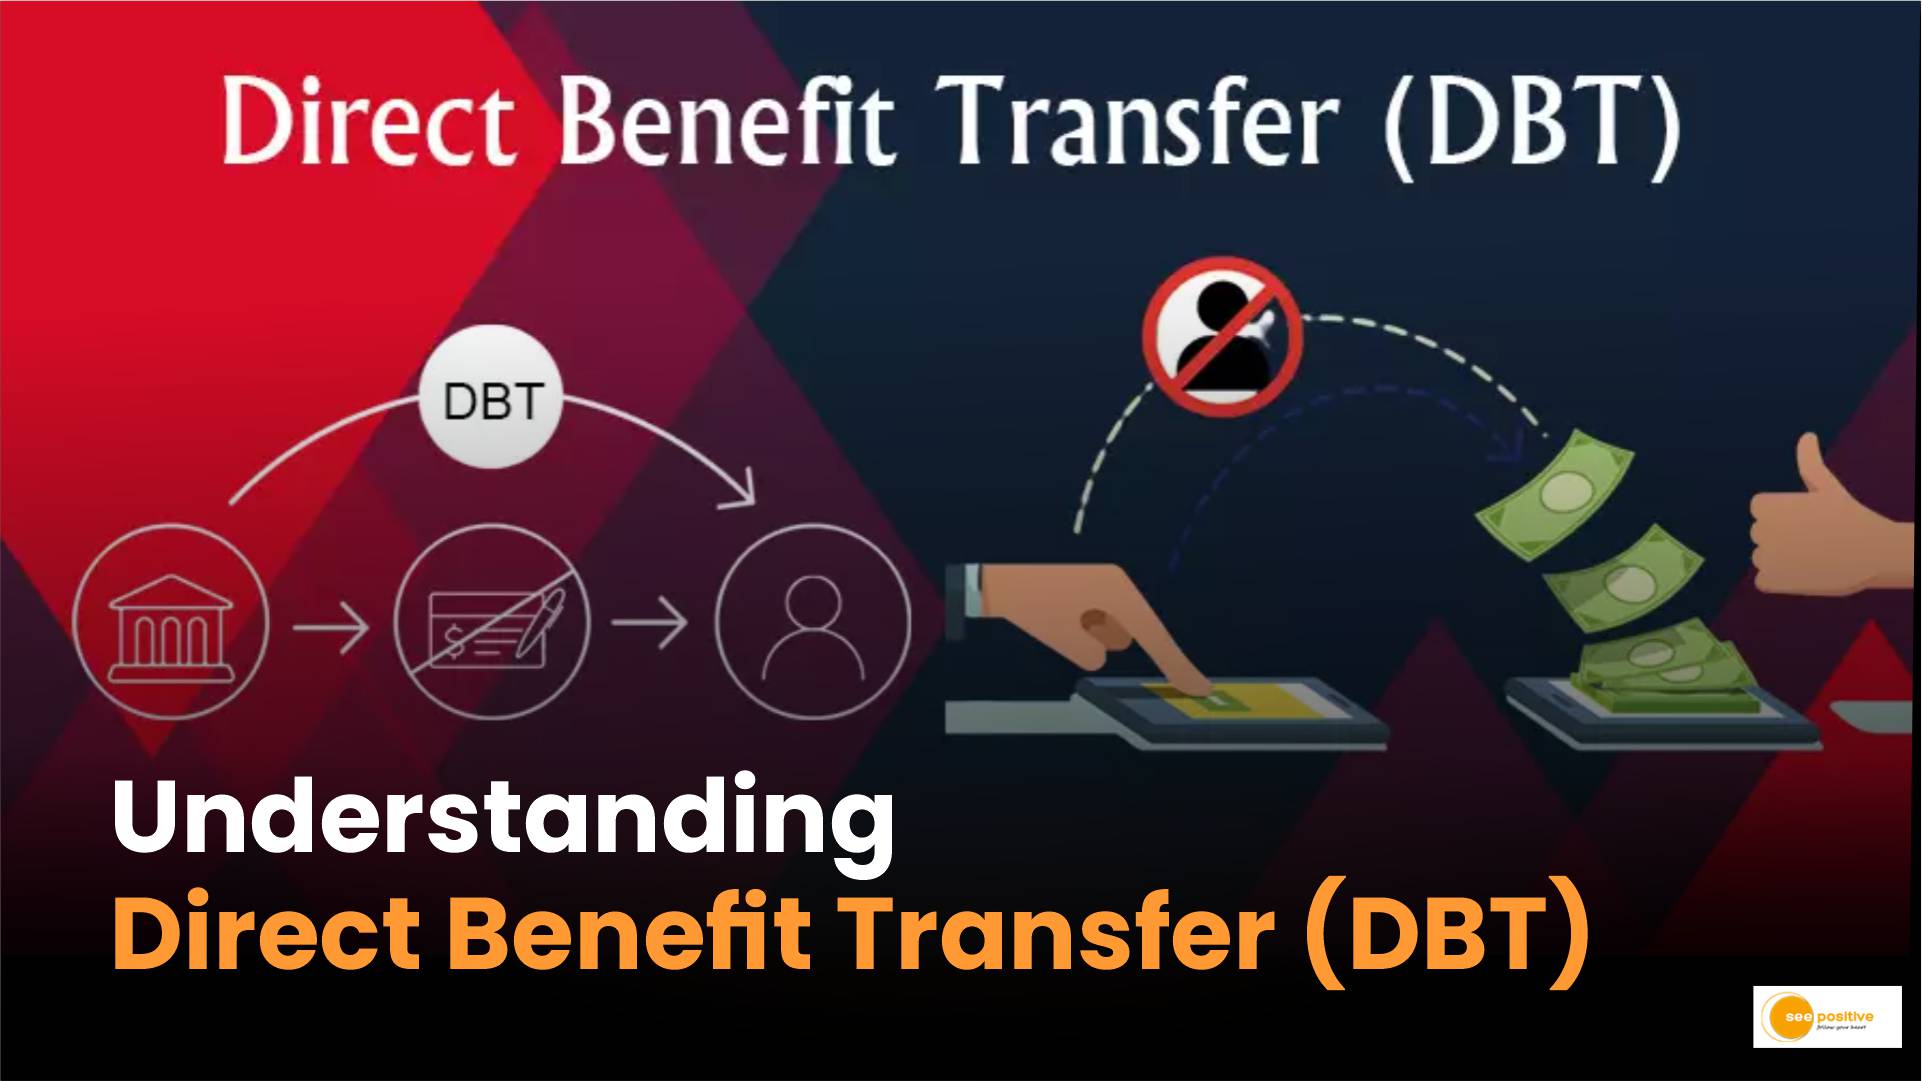 Direct Benefit Transfer